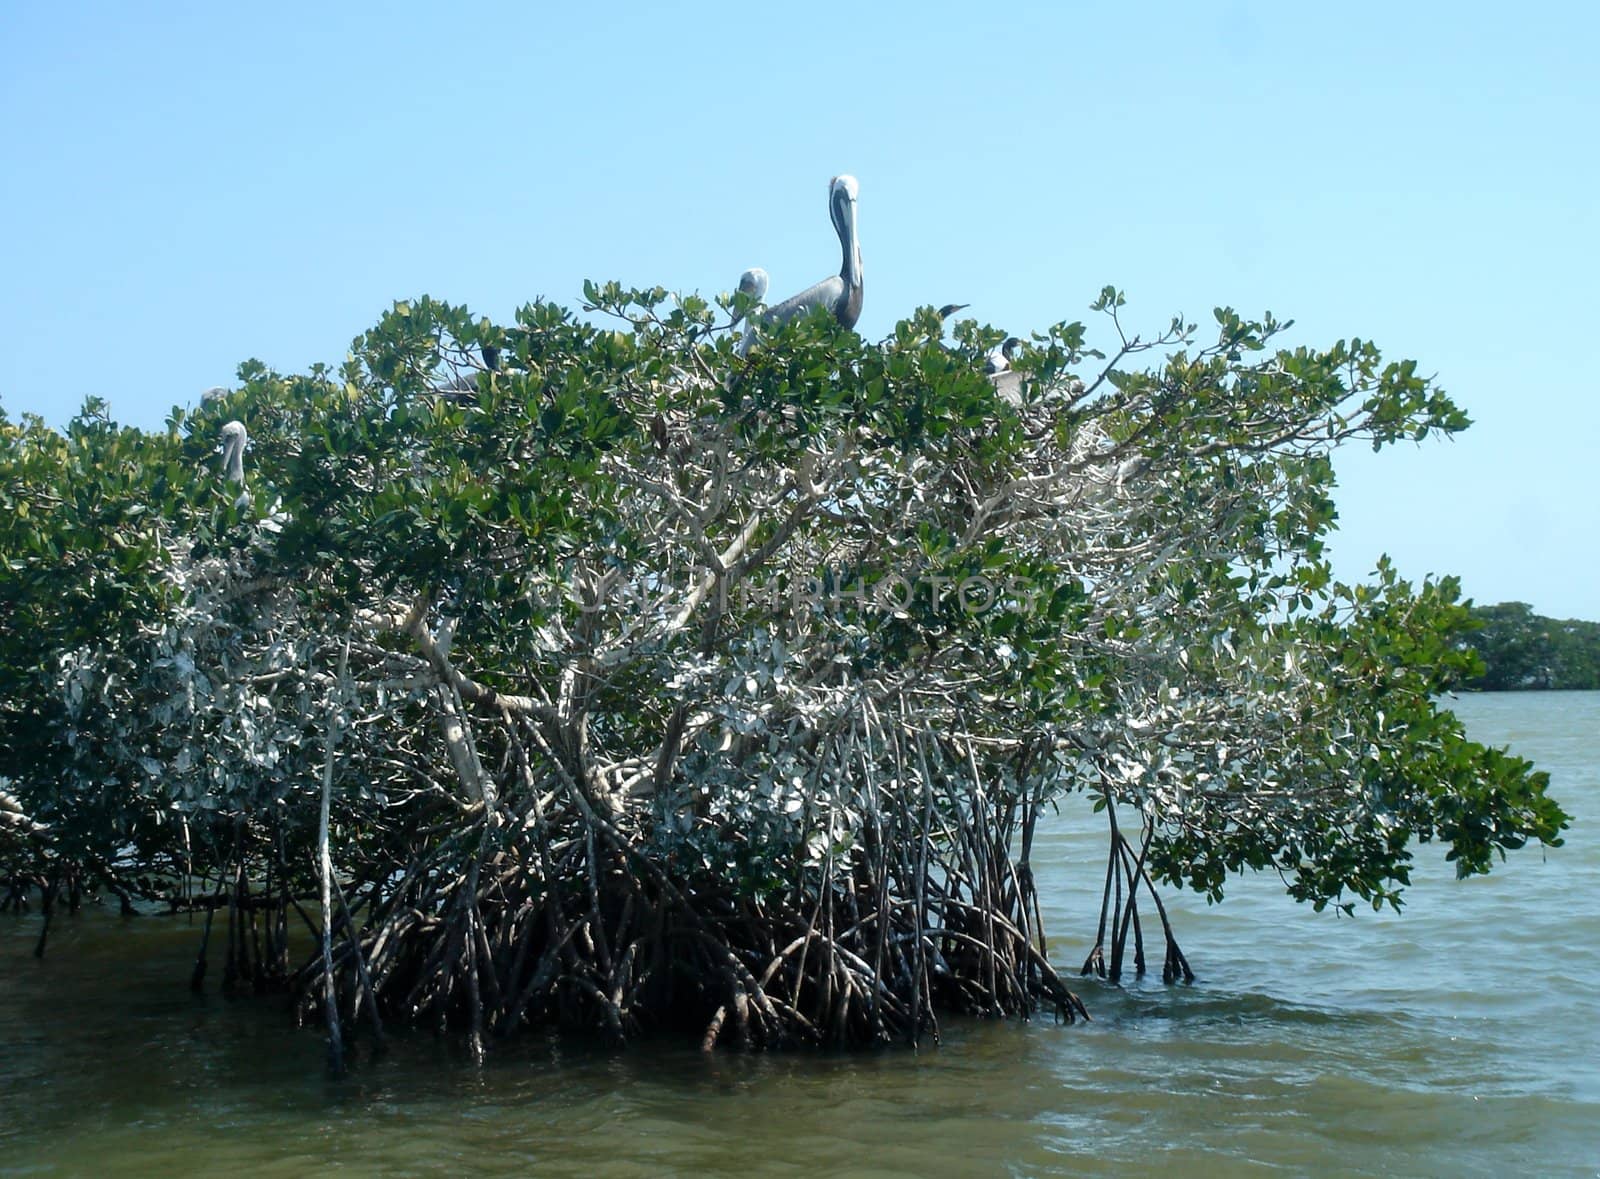 Several pelicans sitting on mangrove trees, Everglades, Florida, USA